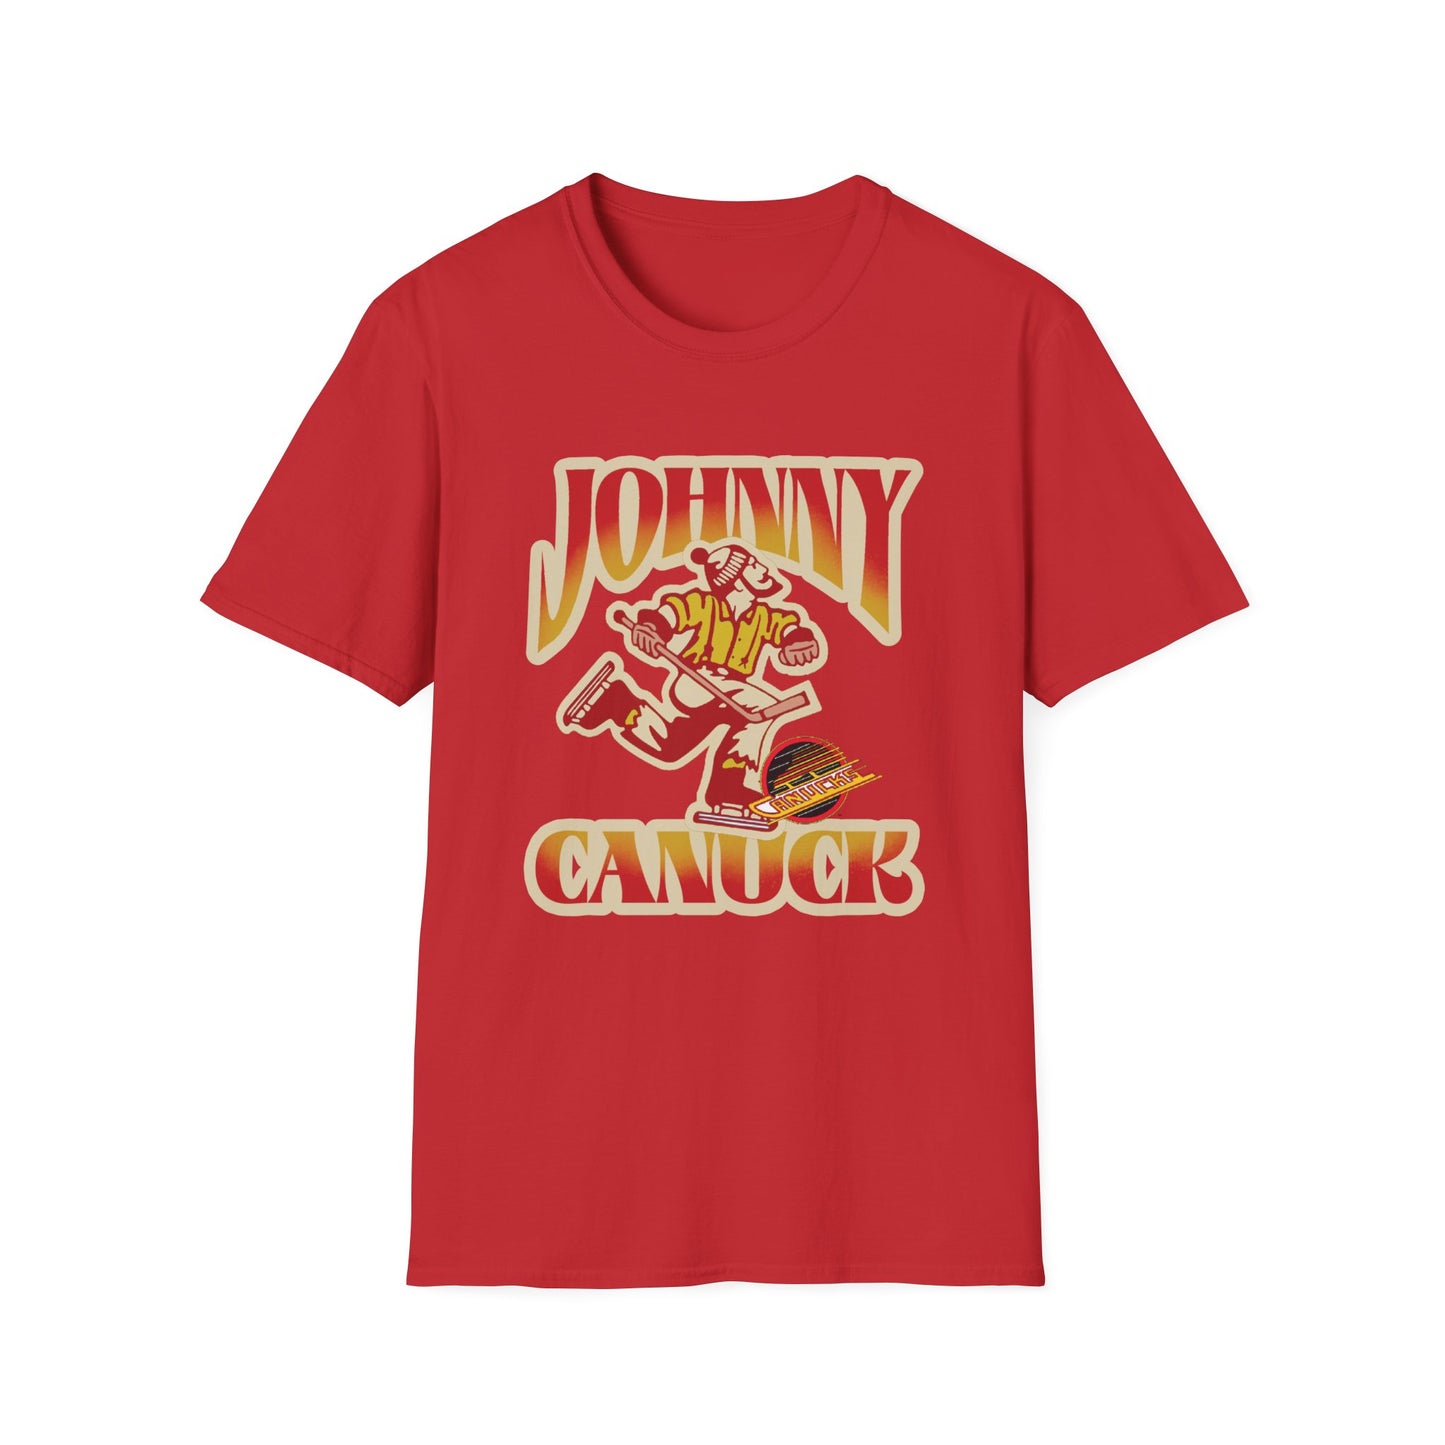 Johnny Canuck Black Skate Edition T-Shirt